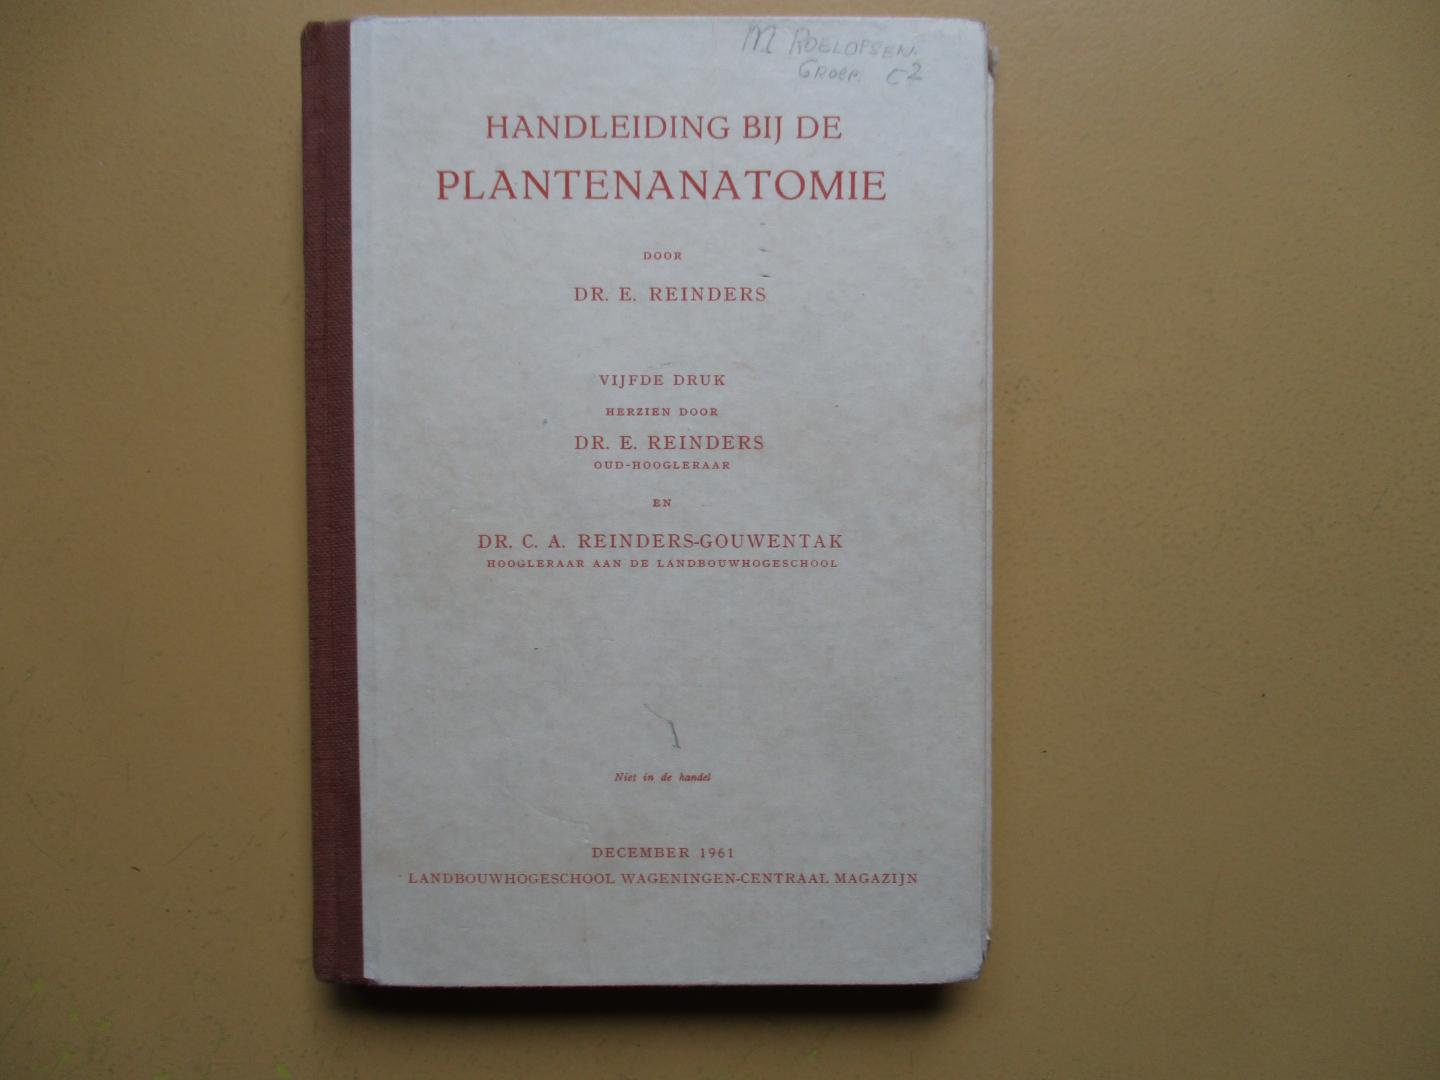 Reinders, dr. E / dr. C. A. Reinders-Gouwentak - Handleiding bij de Plantenanatomie - 5e druk